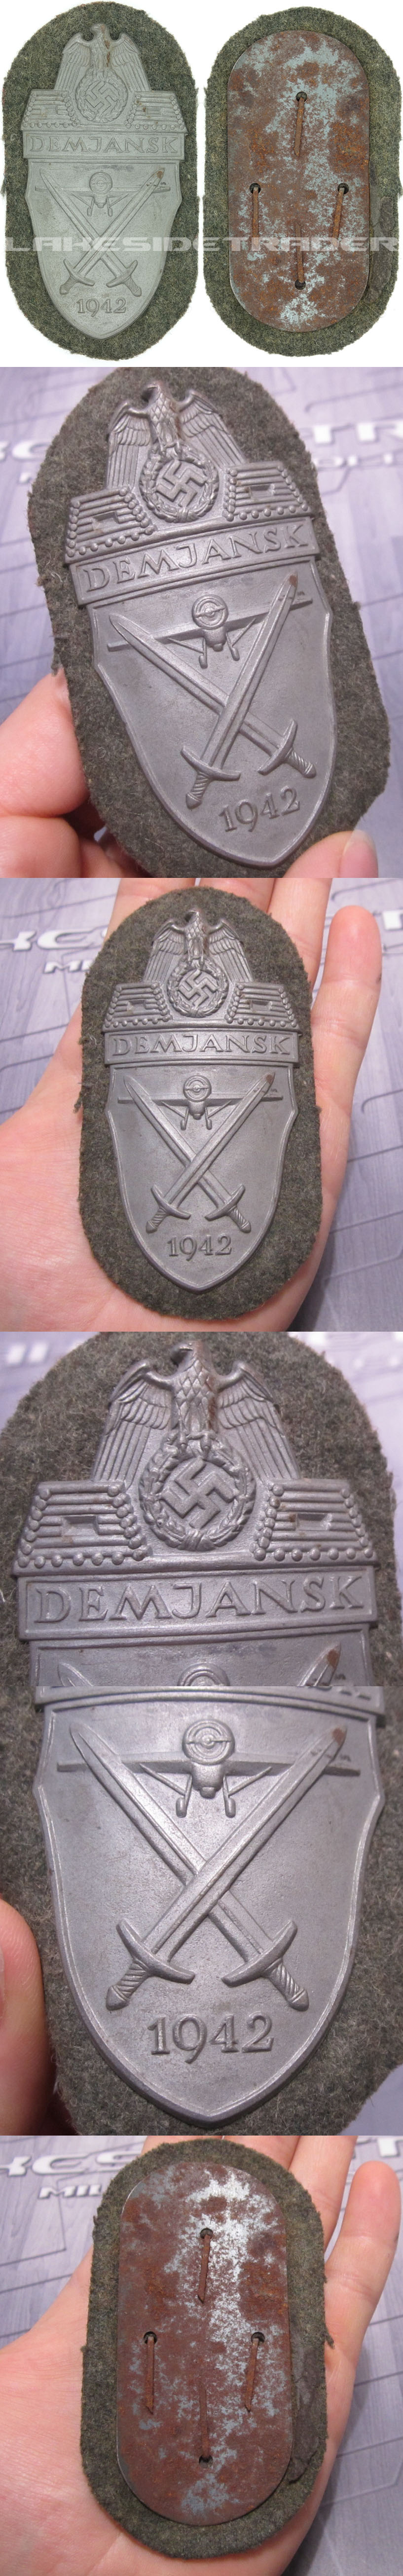 Army Demjansk Arm Shield